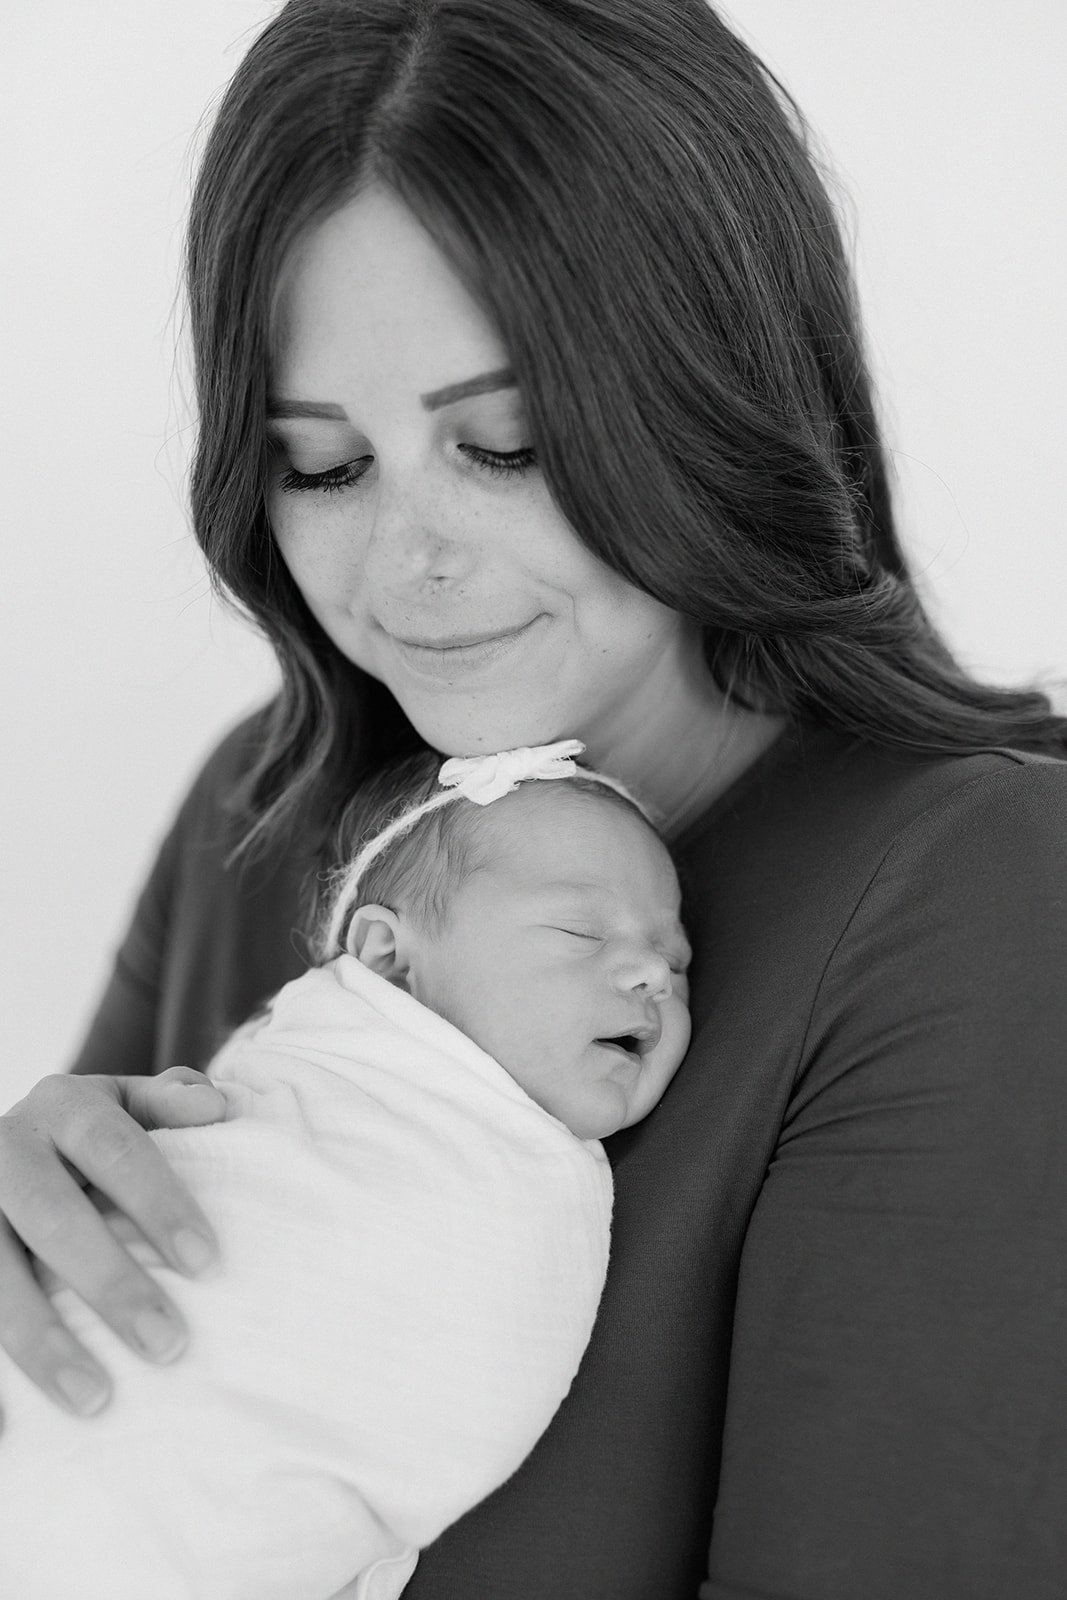 houston-newborn-photographer-kimberly-brooke-lifestlye-baby-351.jpg